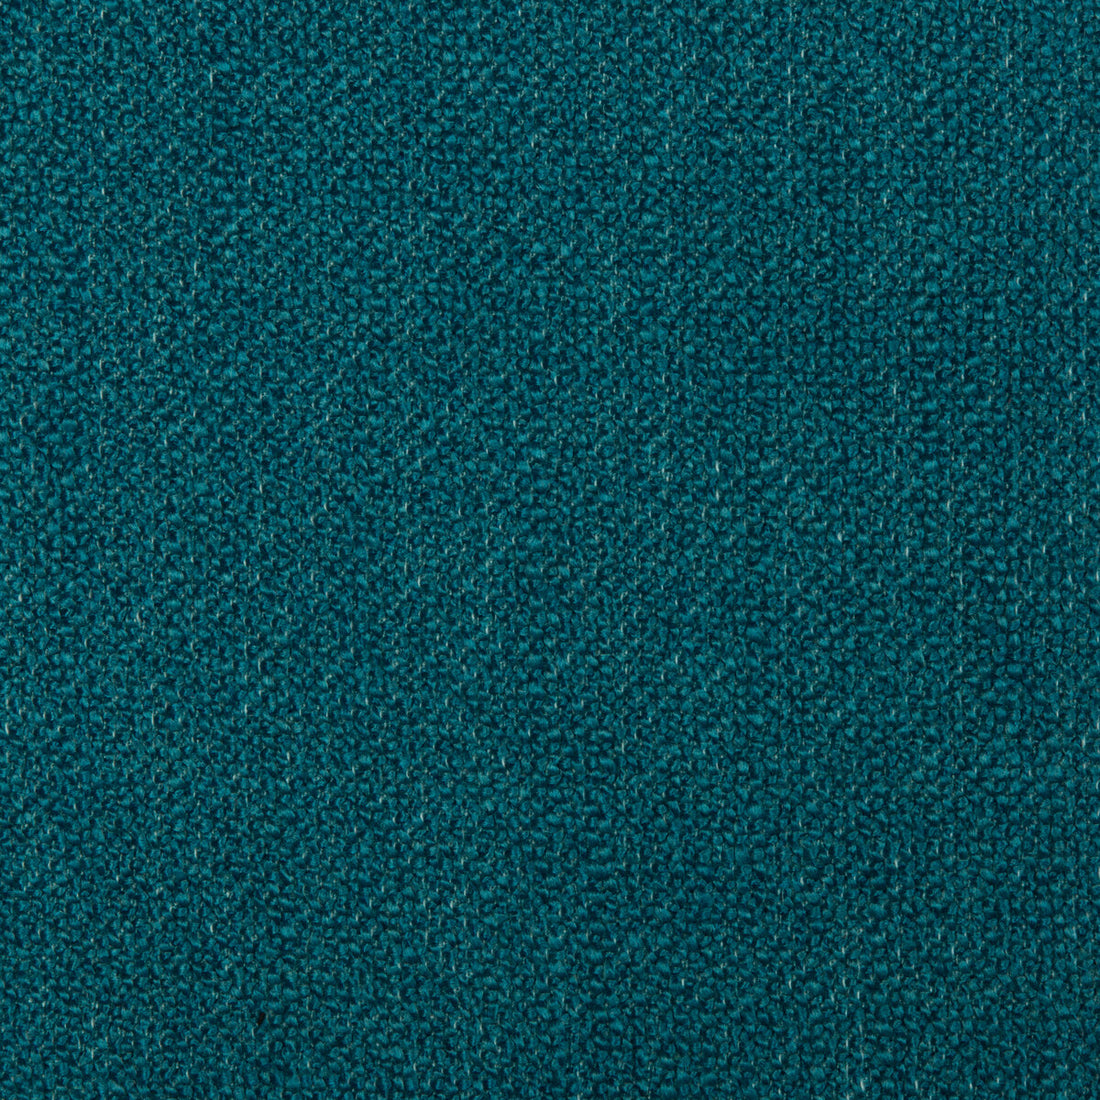 Kravet Smart fabric in 35379-53 color - pattern 35379.53.0 - by Kravet Smart in the Performance Kravetarmor collection